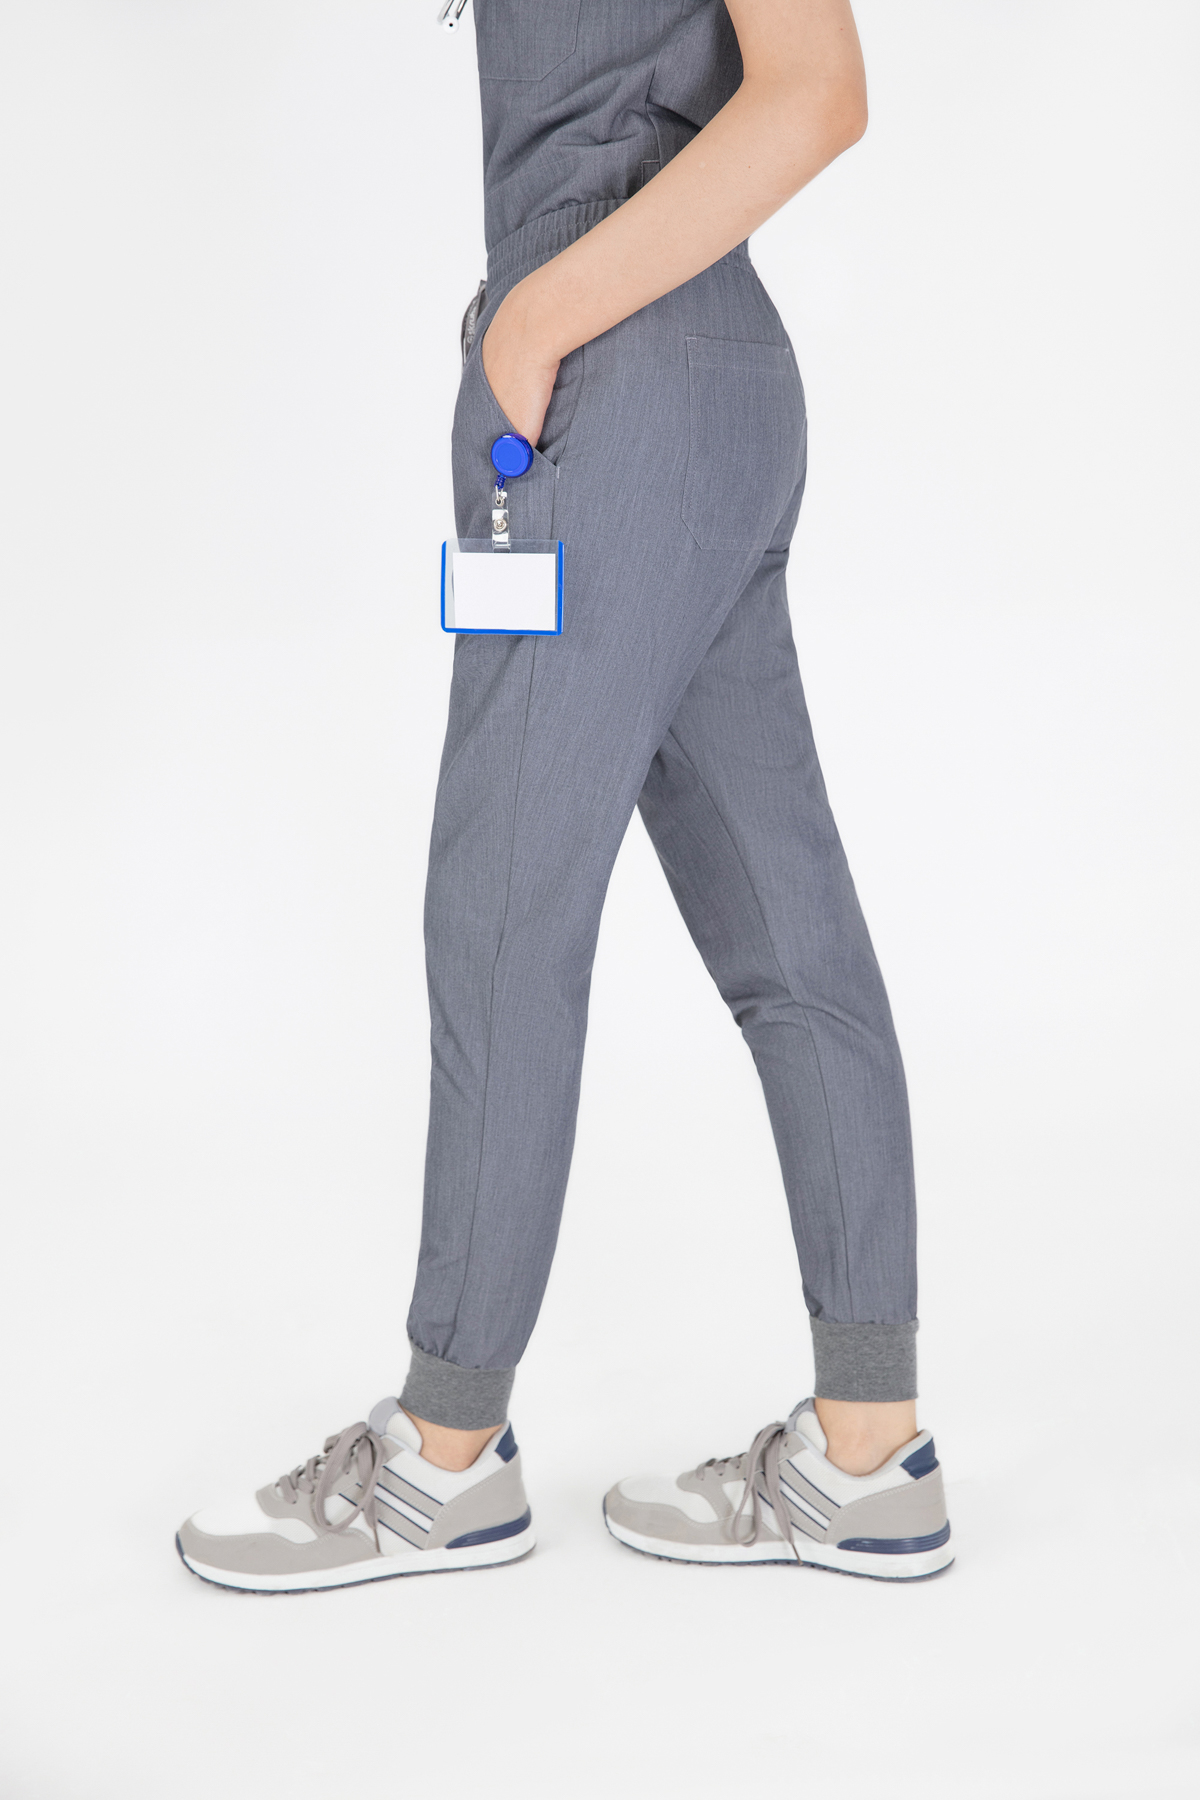 Roku 6 Pocket Jogger Scrub Pants of 5 Colors For Women's